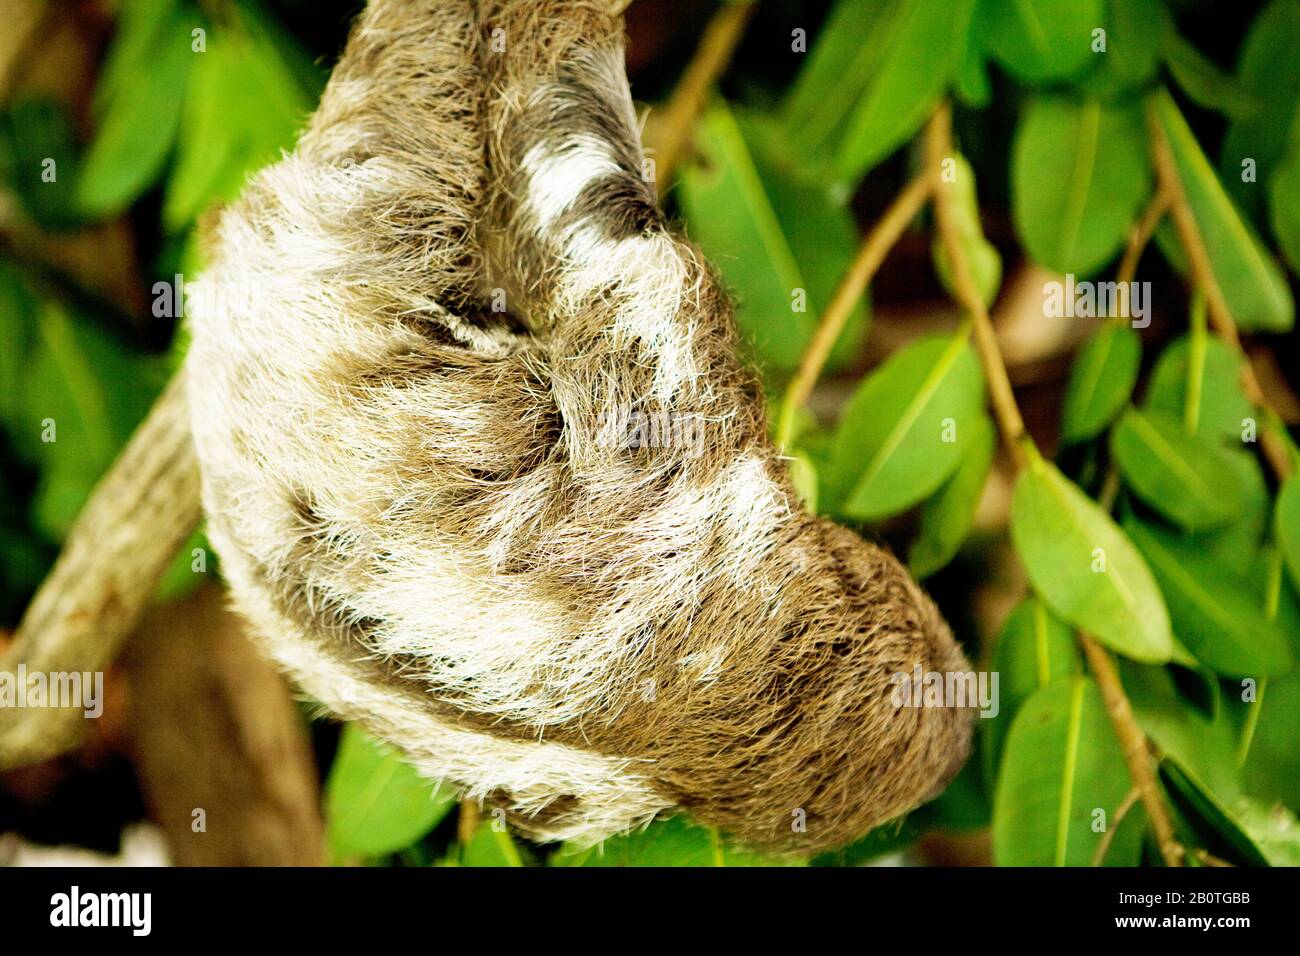 Preguiça-comum se alimentando de folhas de figueira, (Bradypus variegatus), Bug Laziness, Laziness-commonm, Bahia, Brazil Stock Photo